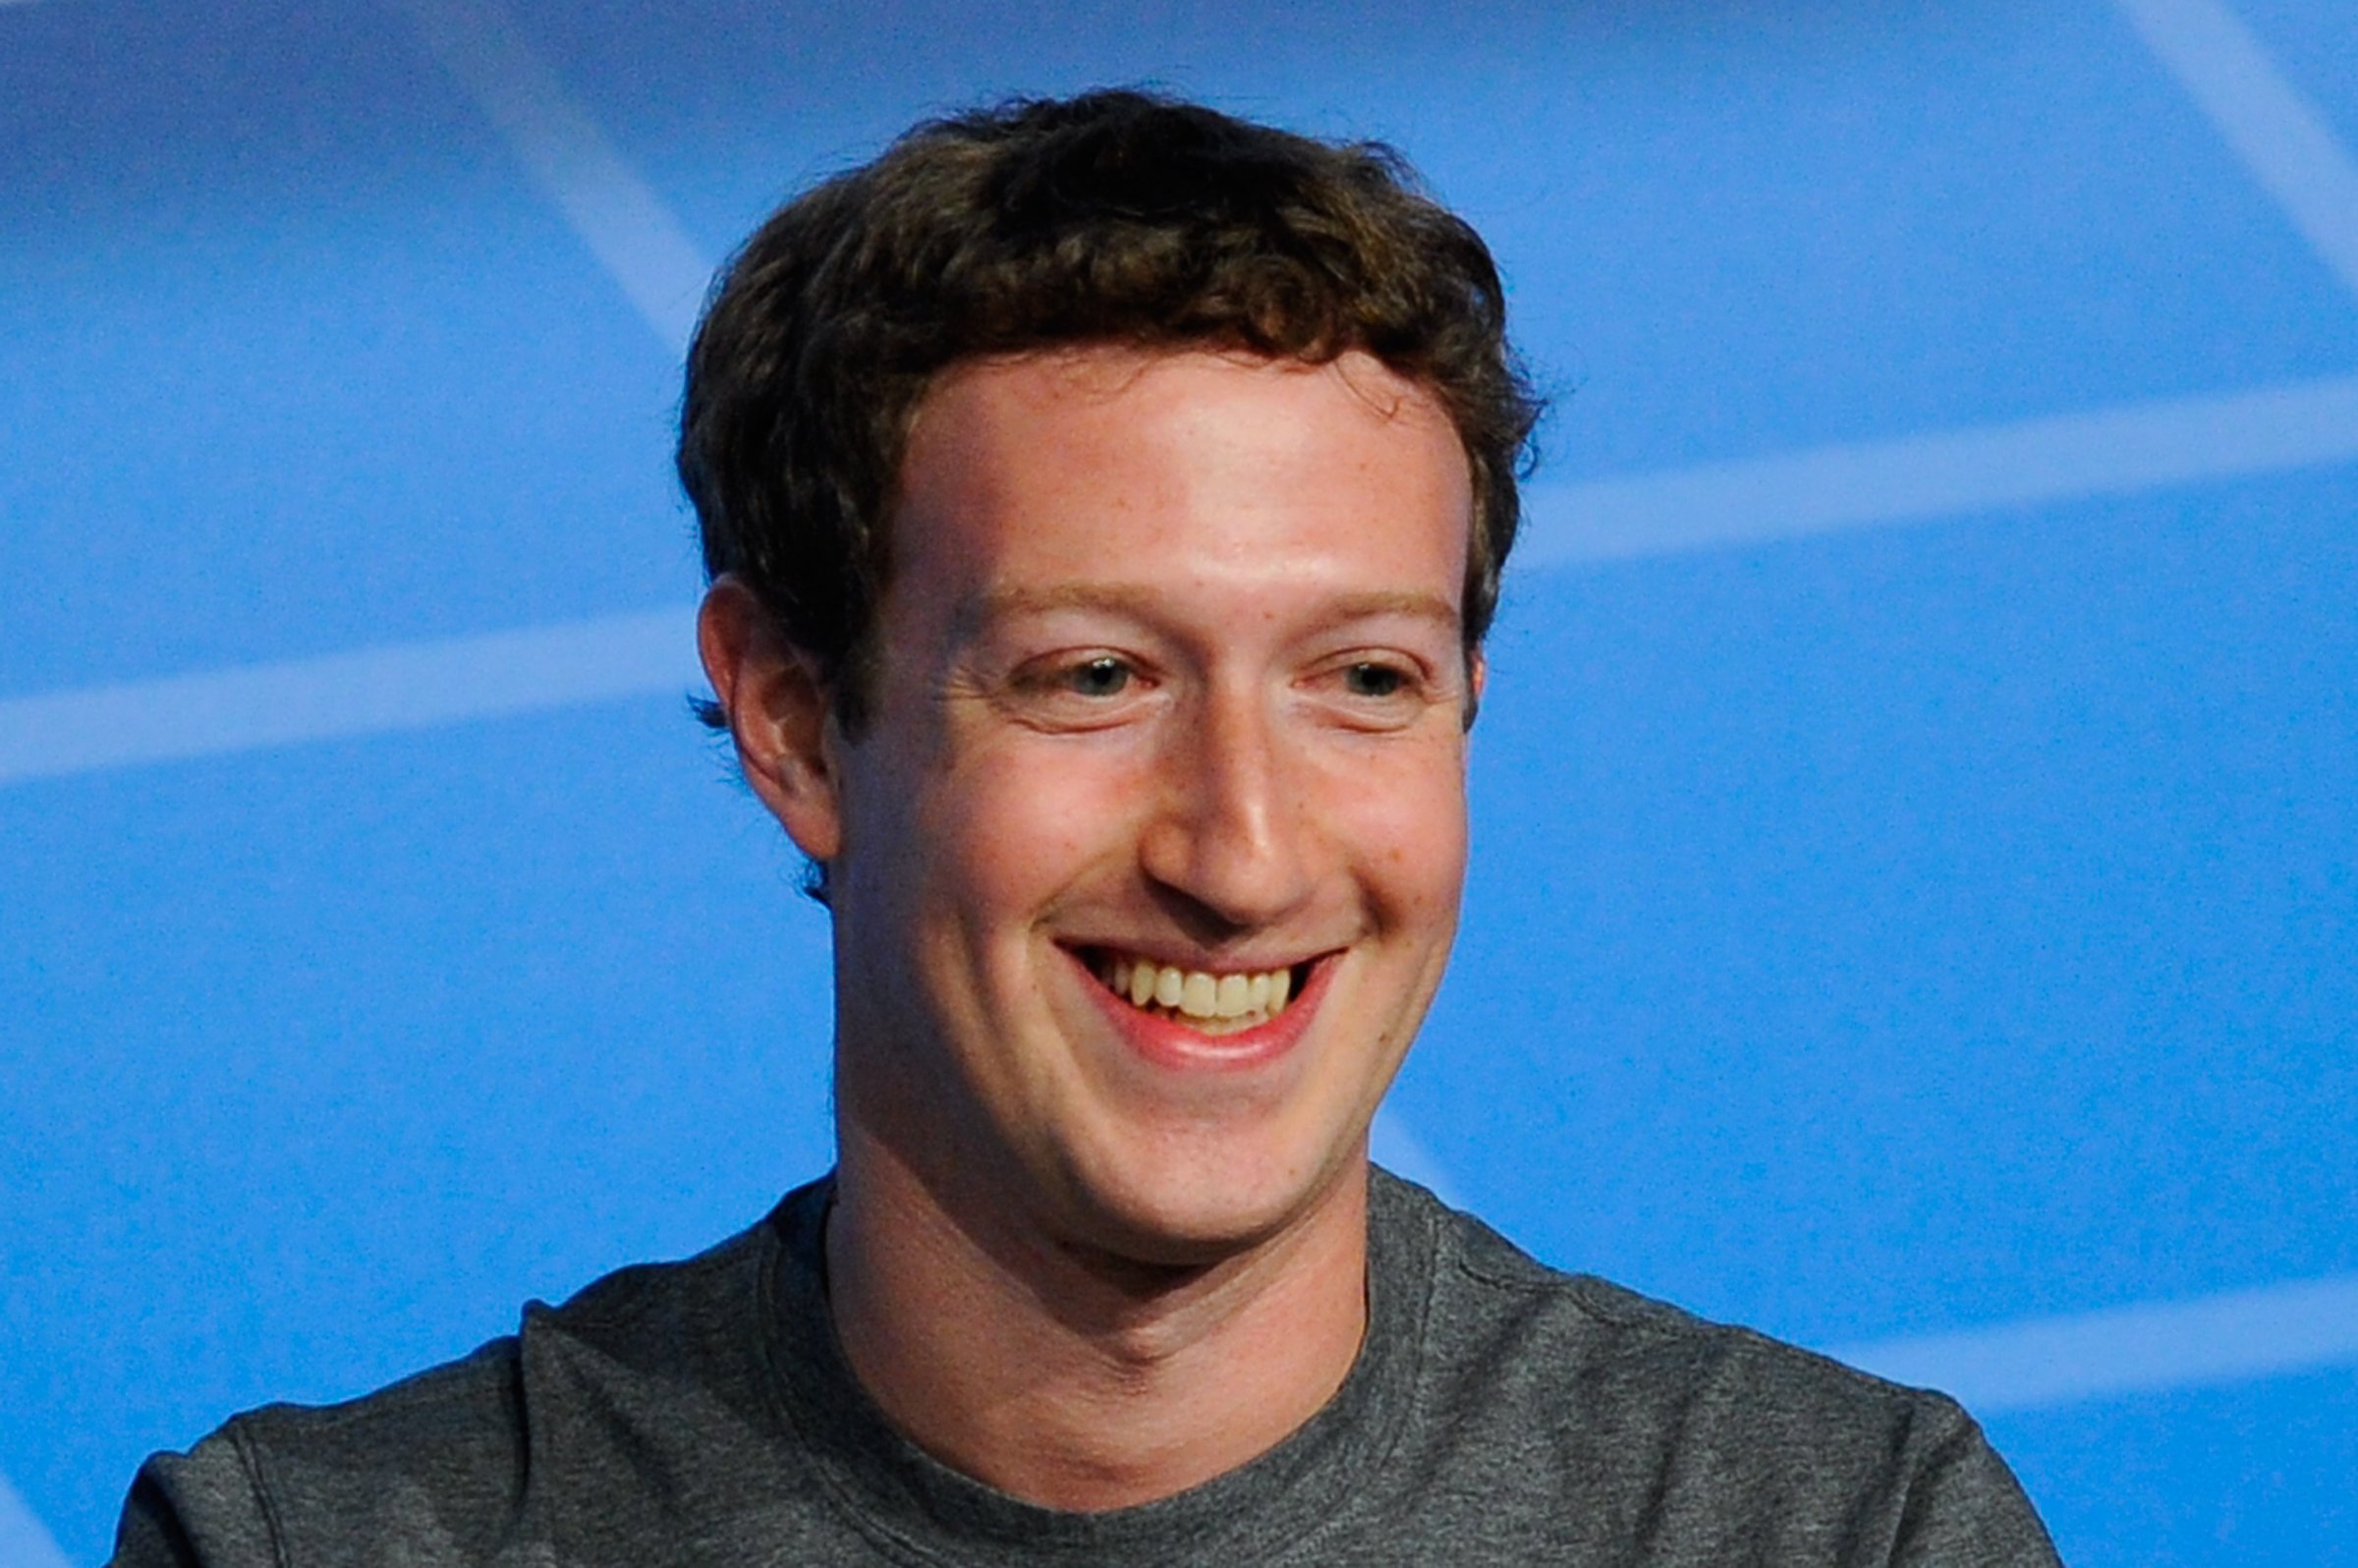 Facebook CEO Mark Zuckerberg on February 24, 2014 in Barcelona, Spain.